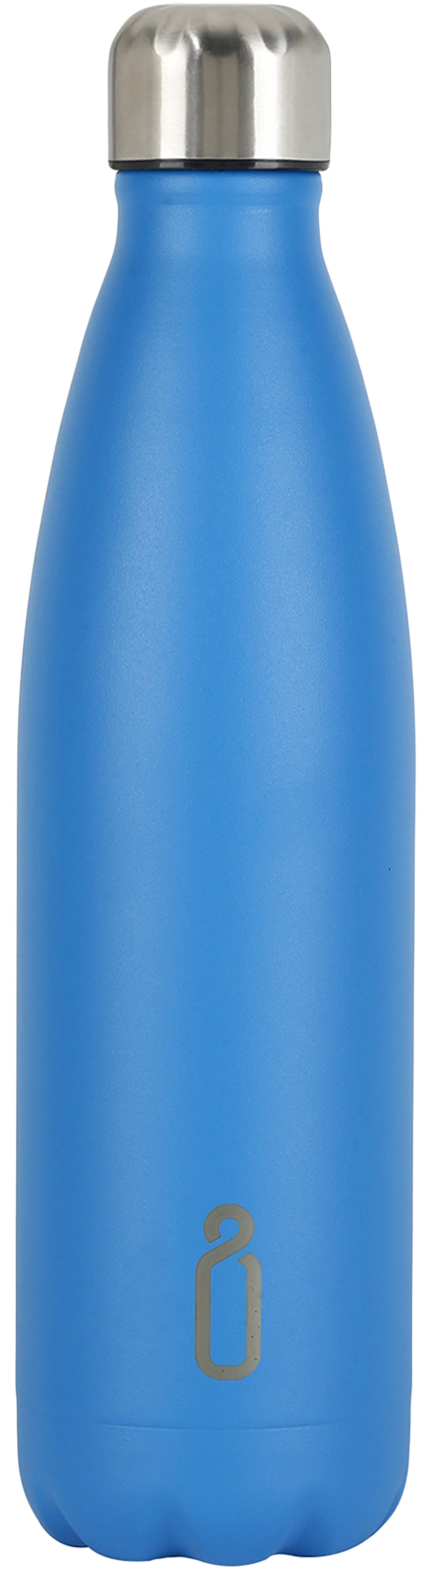 Neon Blue Reusable Water Bottle 750ml